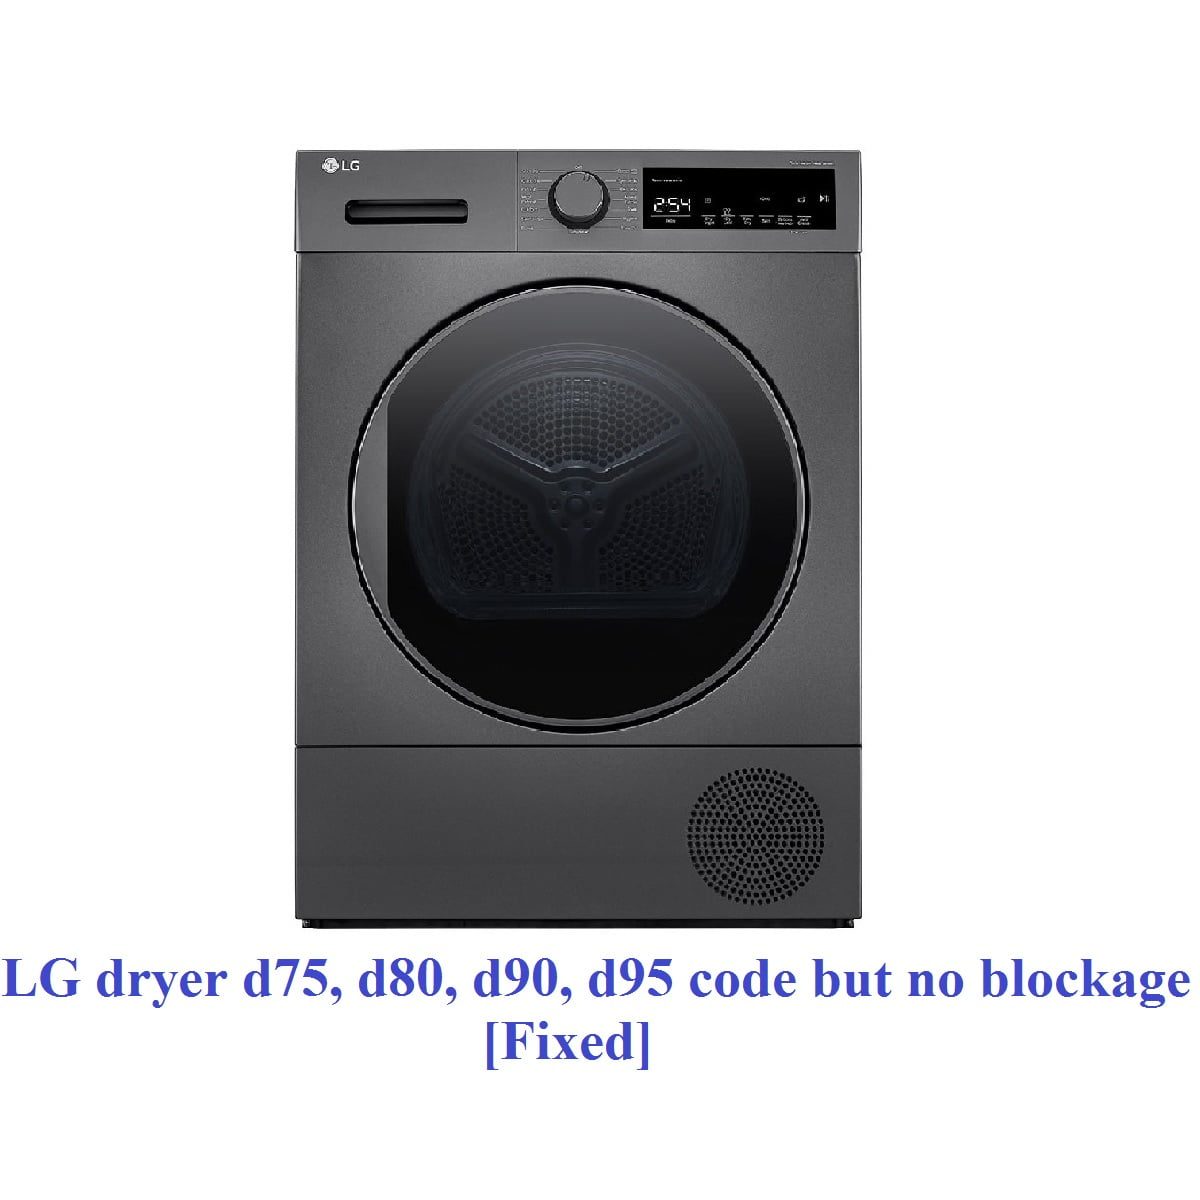 LG dryer d90 code but no blockage